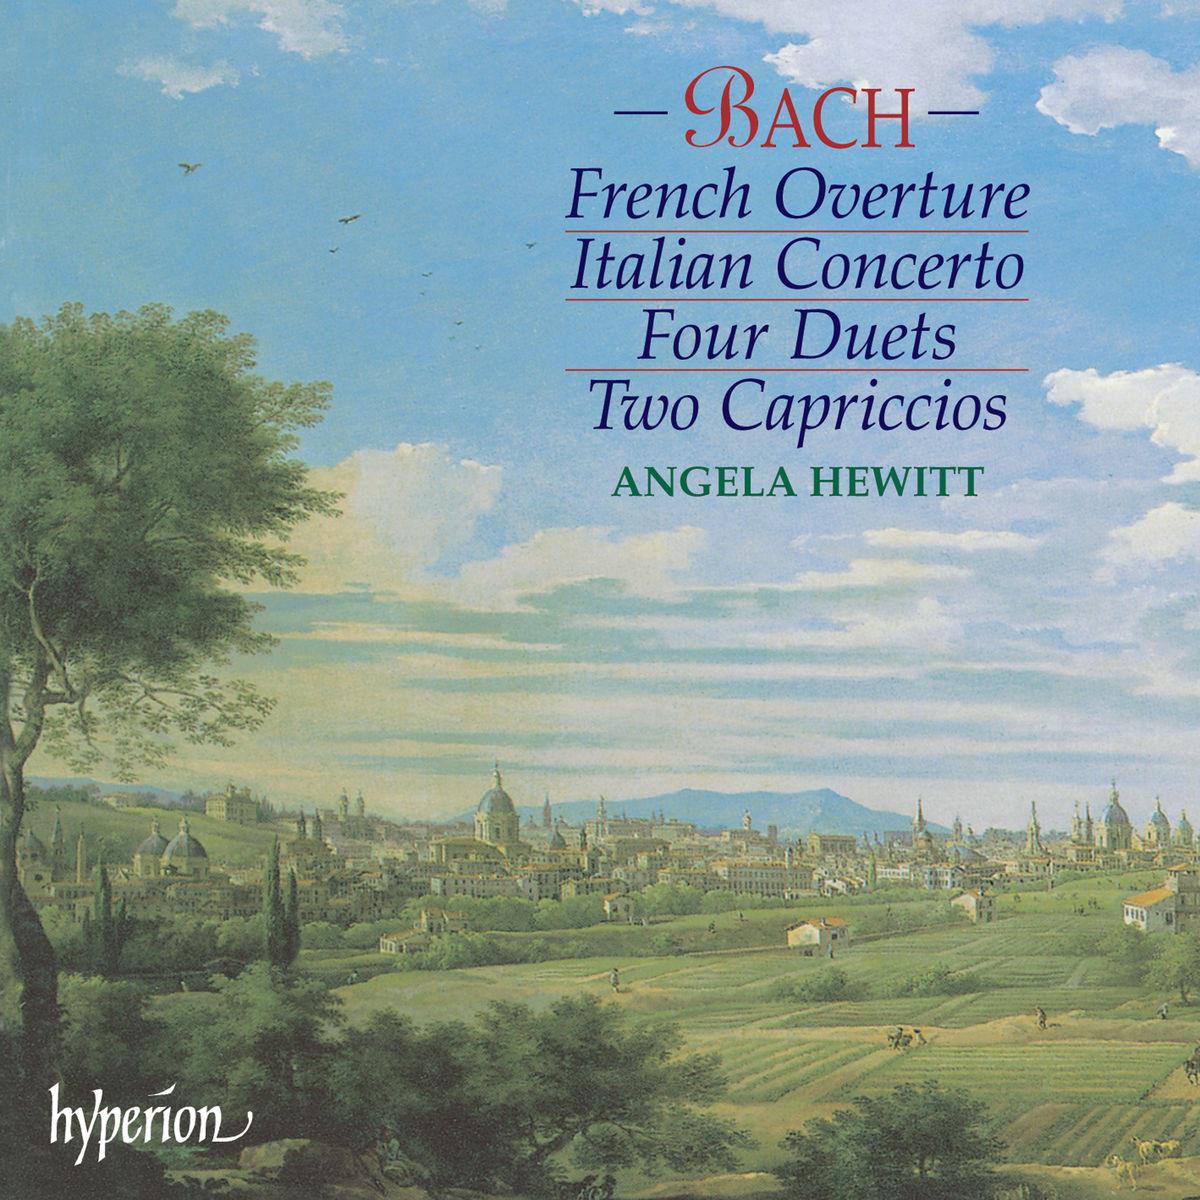 French Overture in b, BWV 831 IX Sarabande